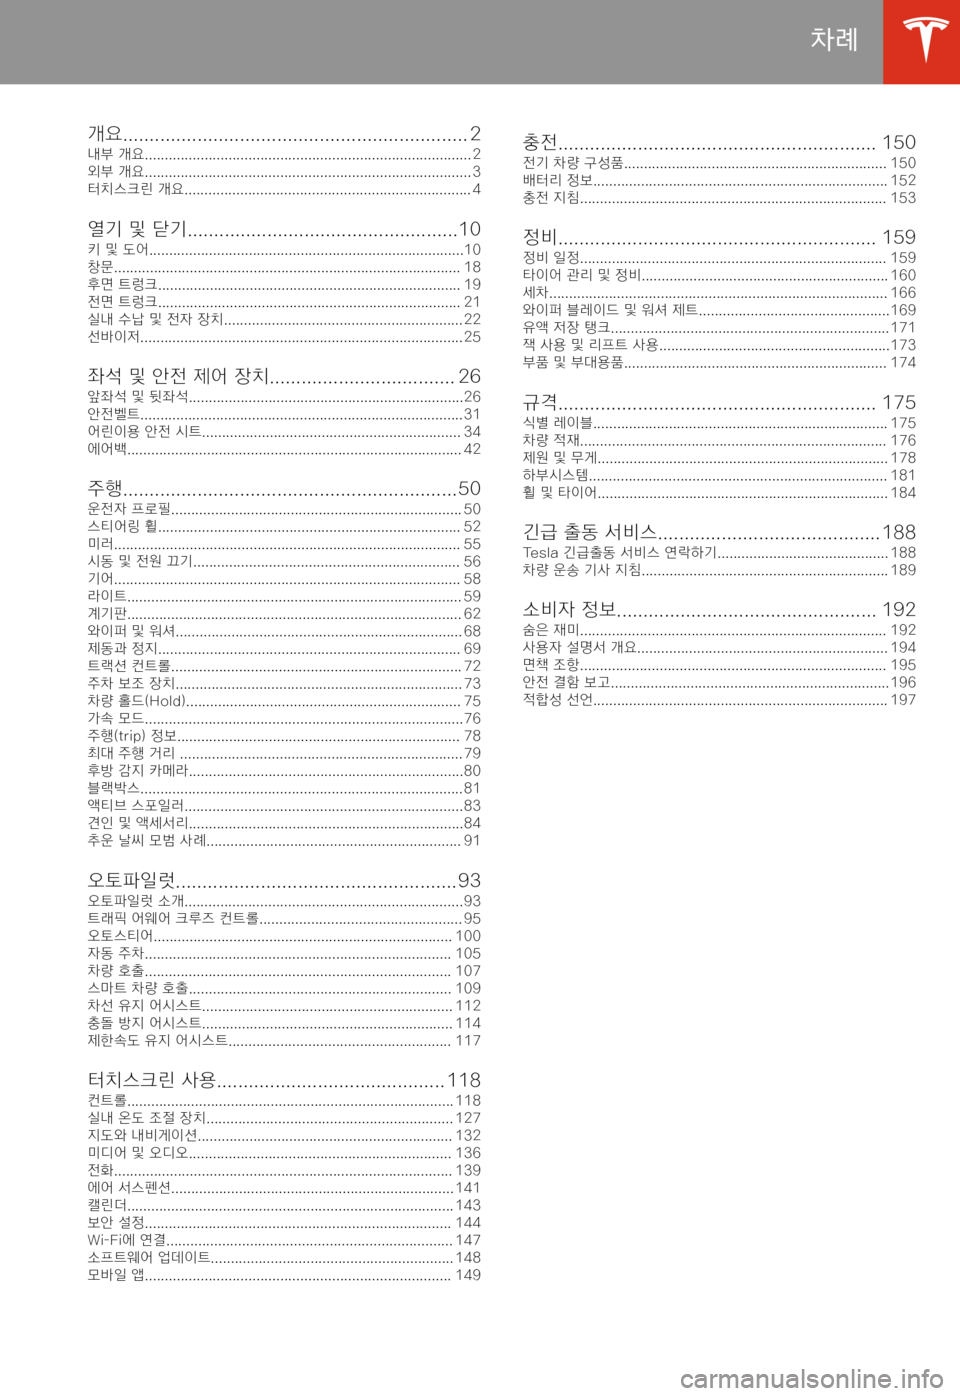 TESLA MODEL X 2020  사용자 가이드 (in Korean)  BE.@
"9